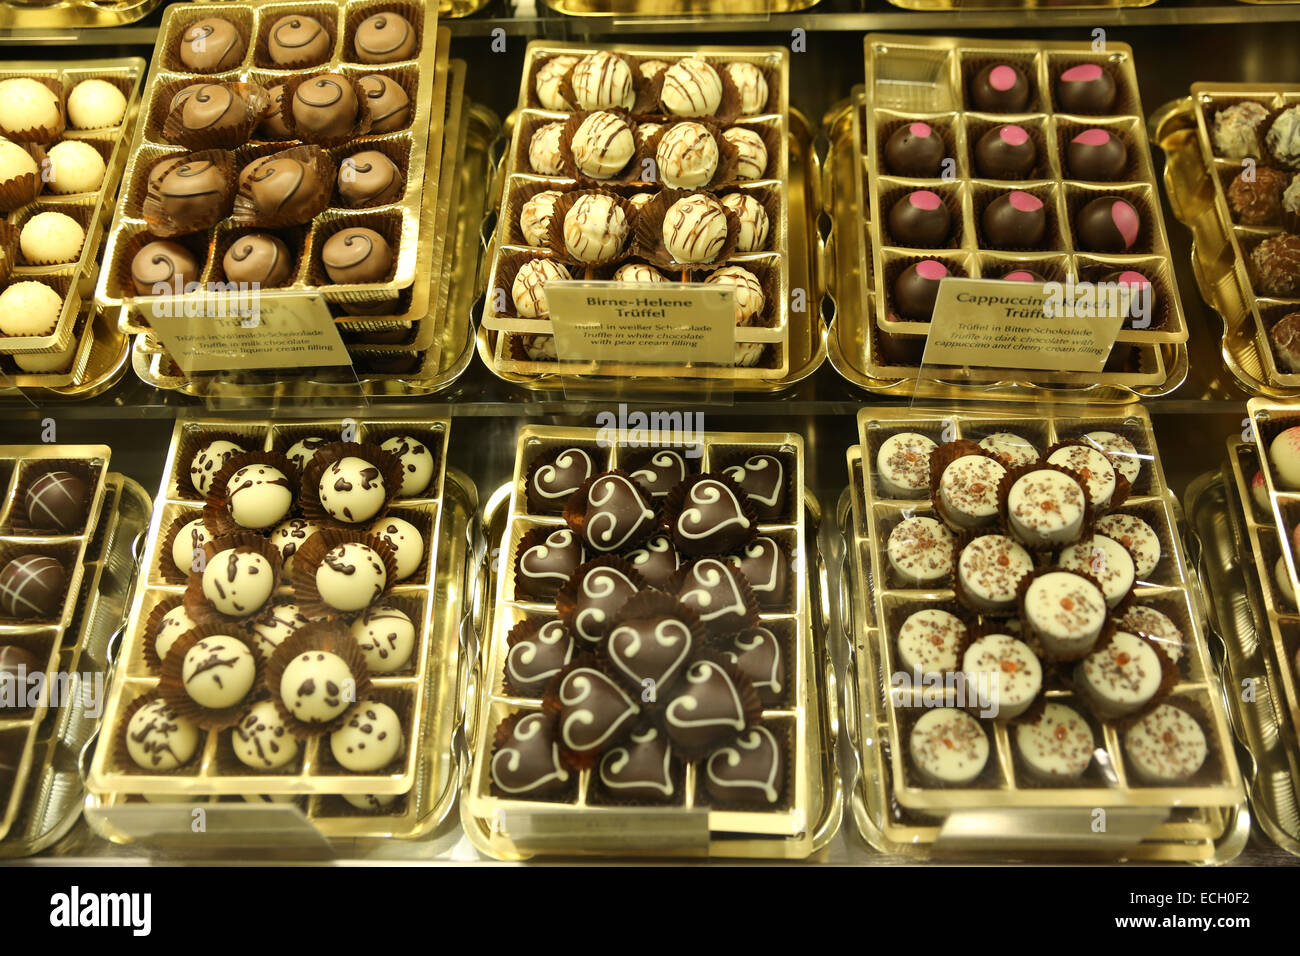 chocolate truffel inside store berlin fassbender rausch Stock Photo - Alamy